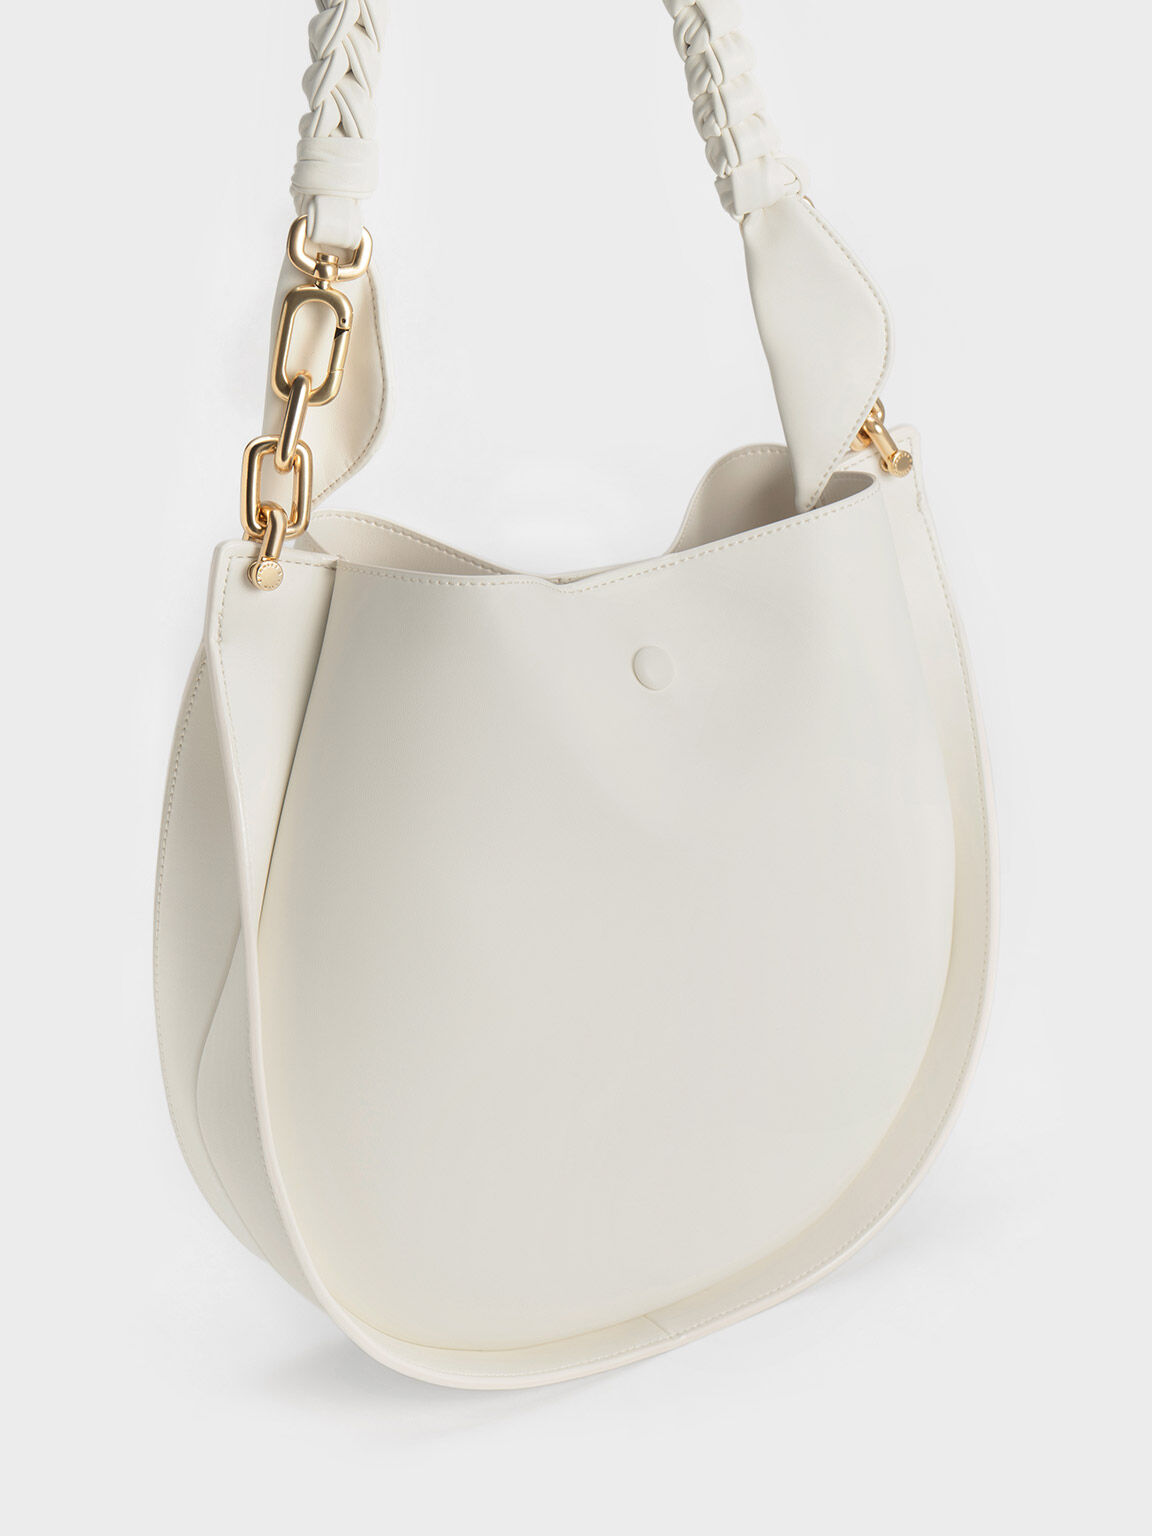 Cleona Braided Handle Shoulder Bag, White, hi-res